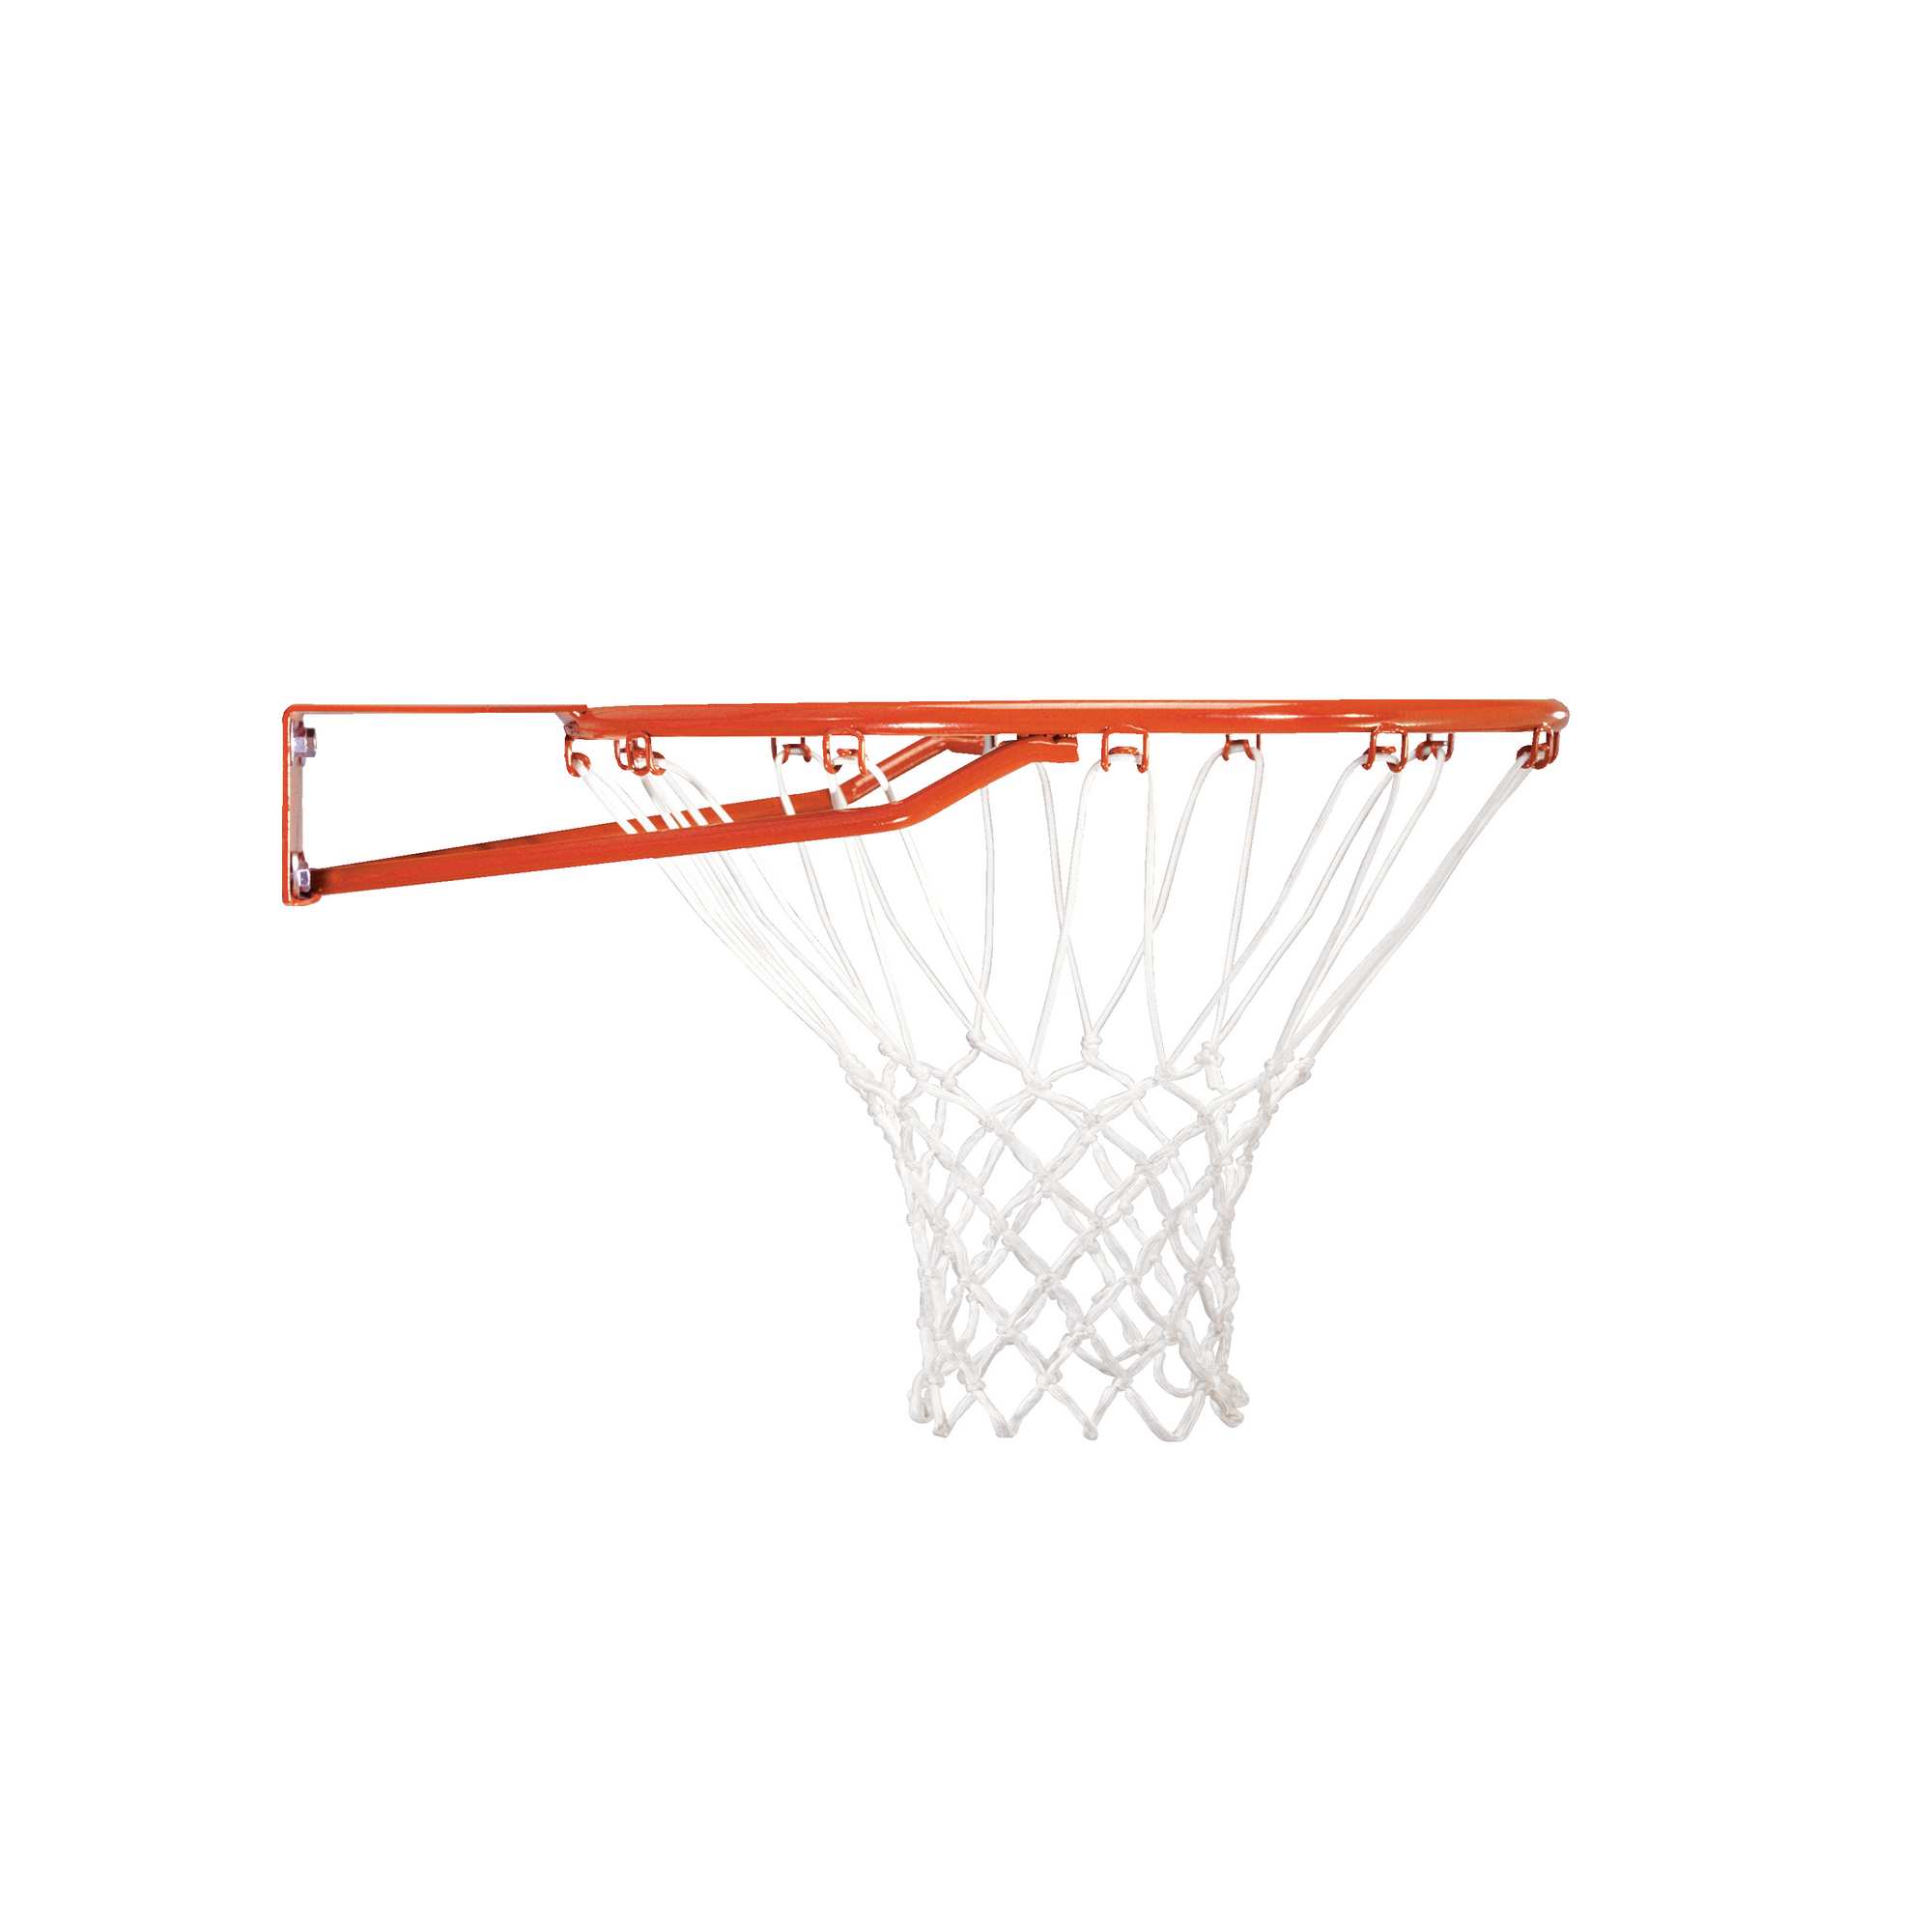 Basketballkorb 'Colorado' schwarz/blau 112 x 72 x 3 cm + product picture